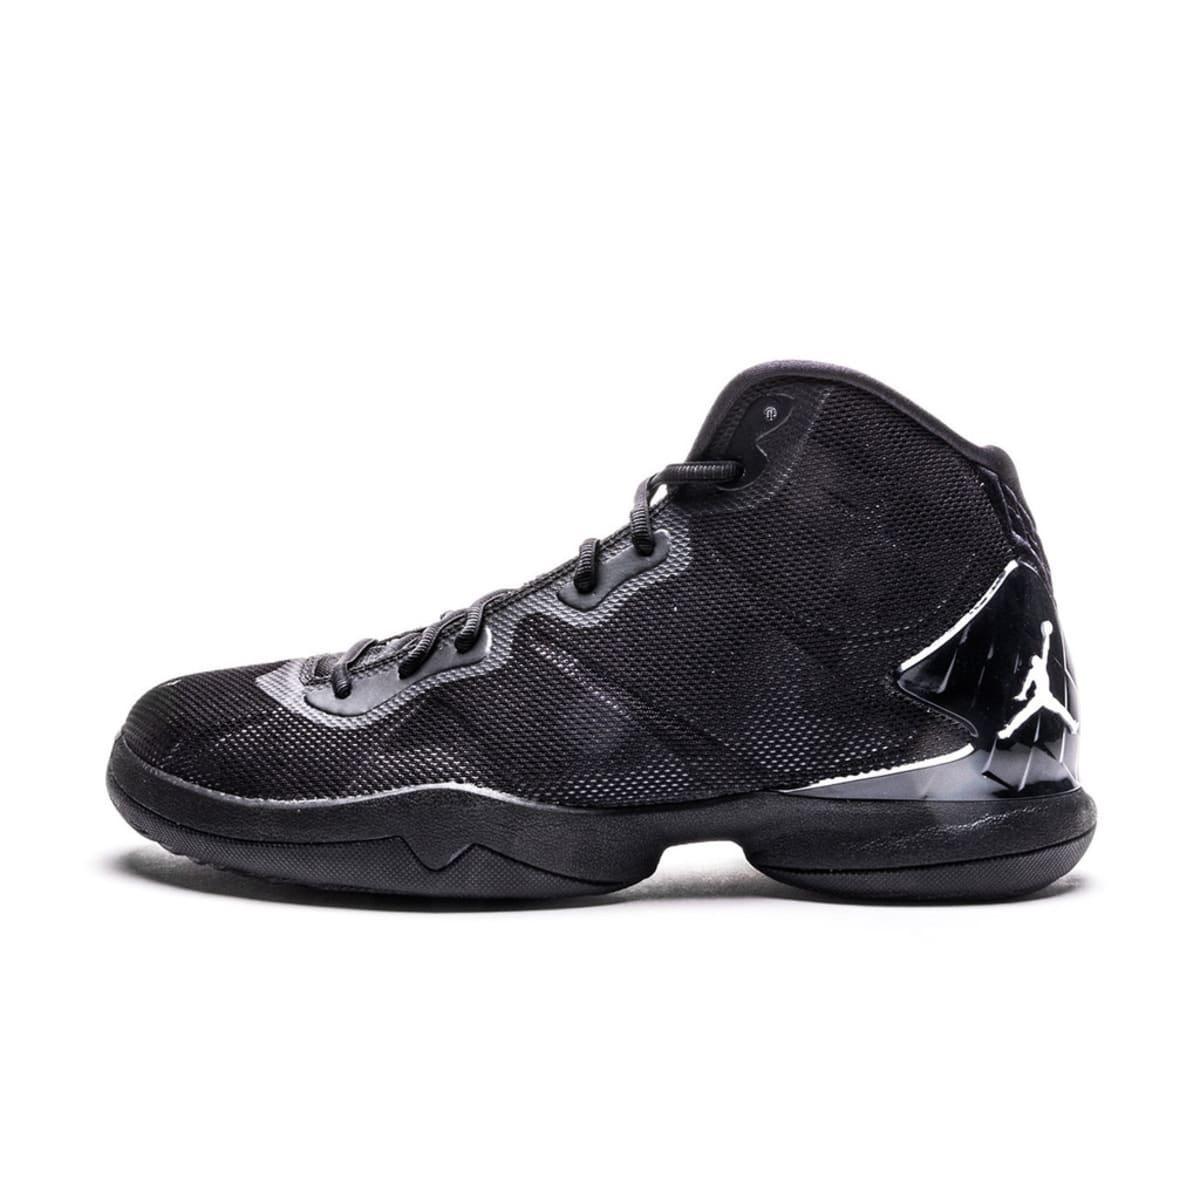 Jordan Super.Fly 4 (IV) | Jordan | Sneaker News, Launches, Release Dates,  Collabs \u0026 Info